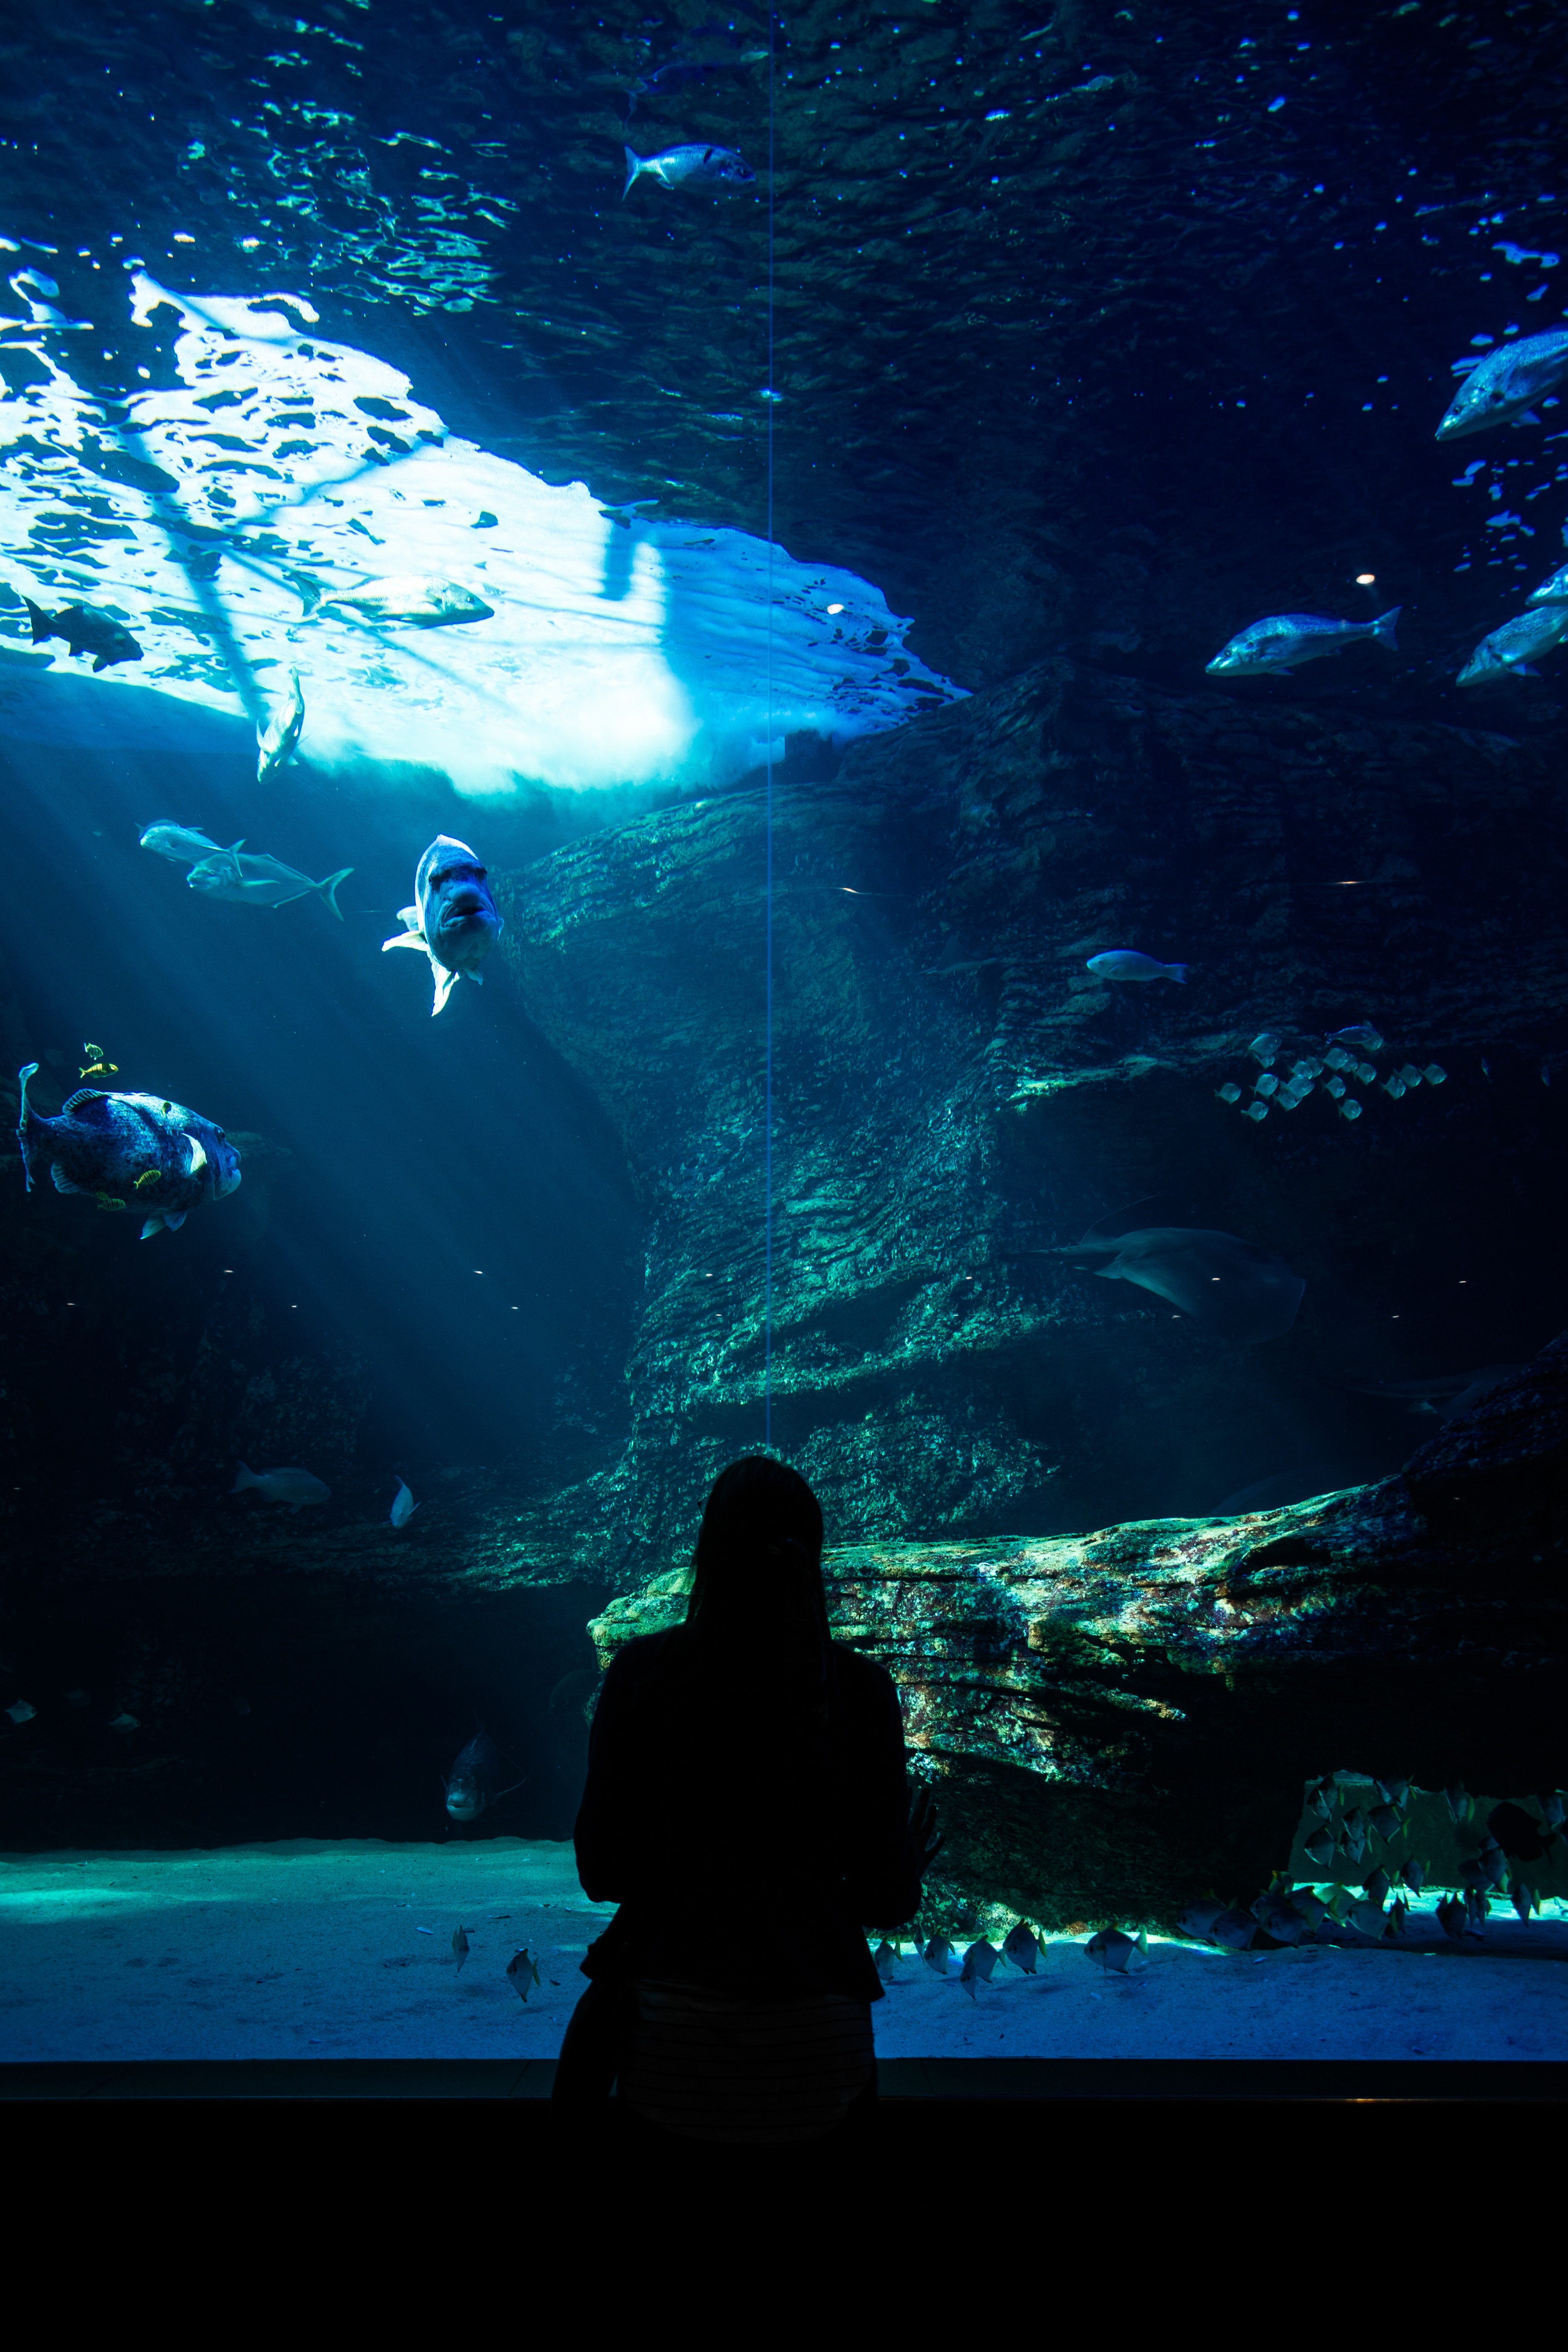 underwater world, silhouette, fishes, aquarium, dark cell phone wallpapers